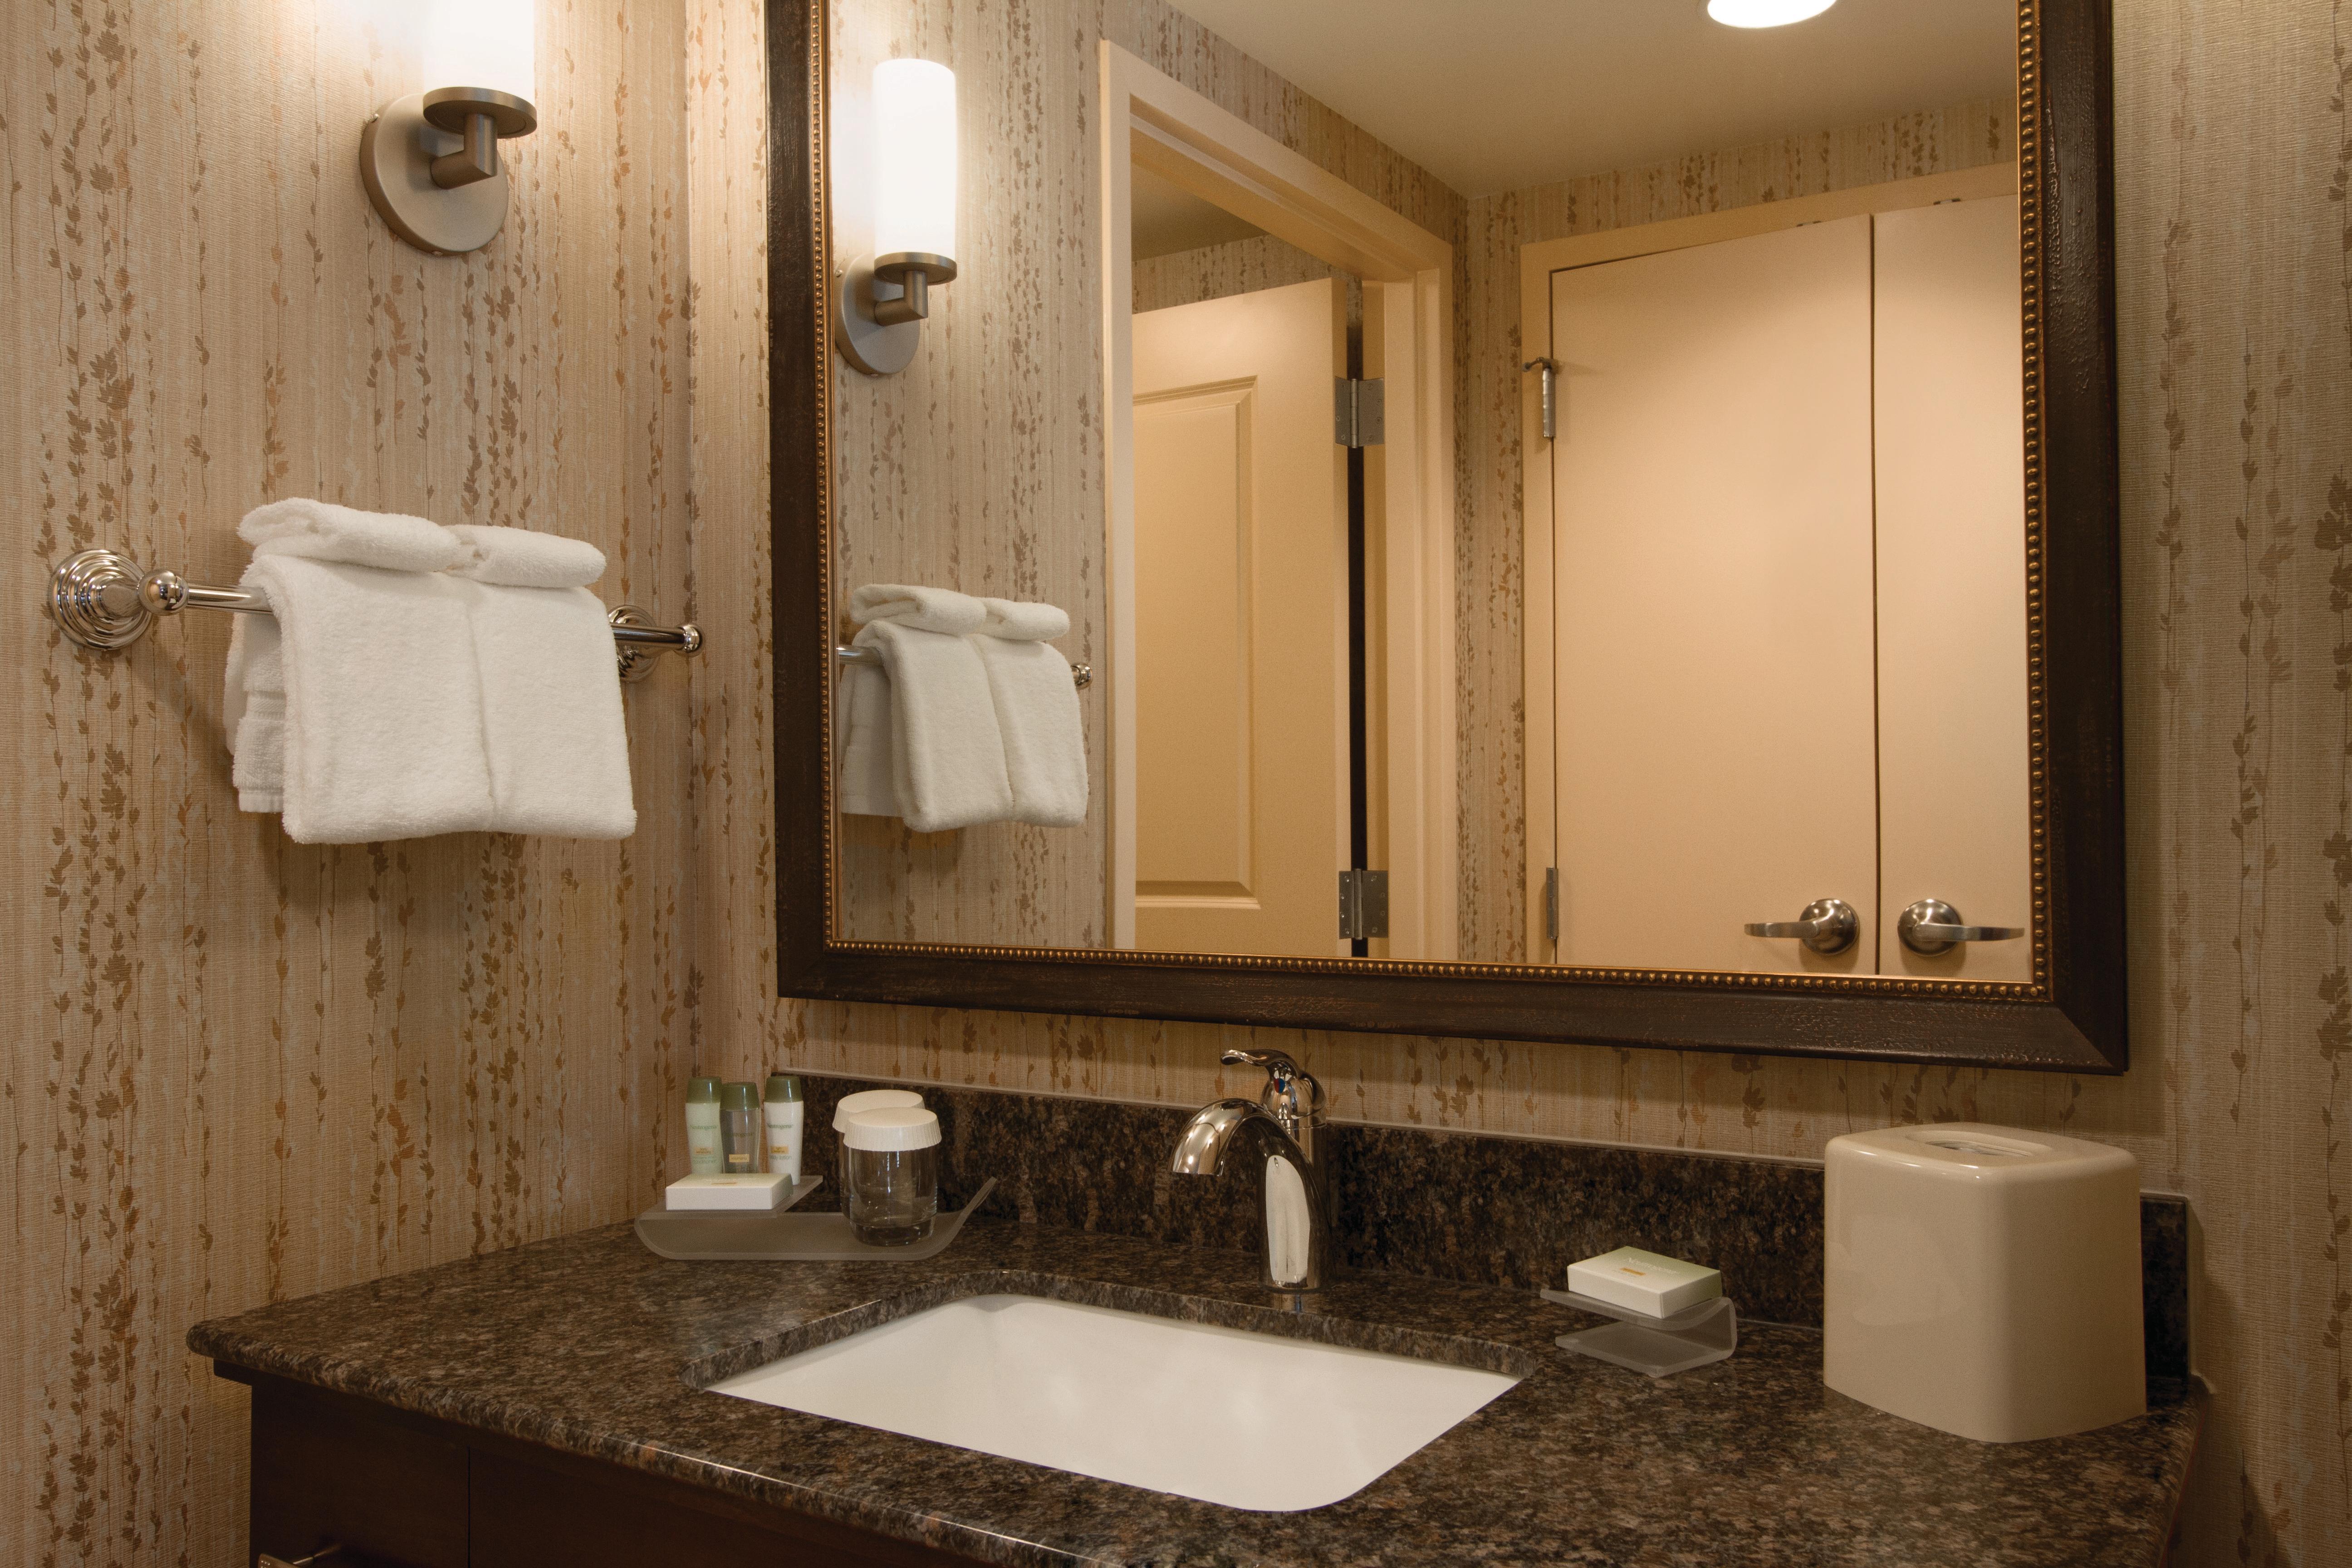 Guest Bathroom With Vanity Mirror, Sink, Towels, and Bath Amenities